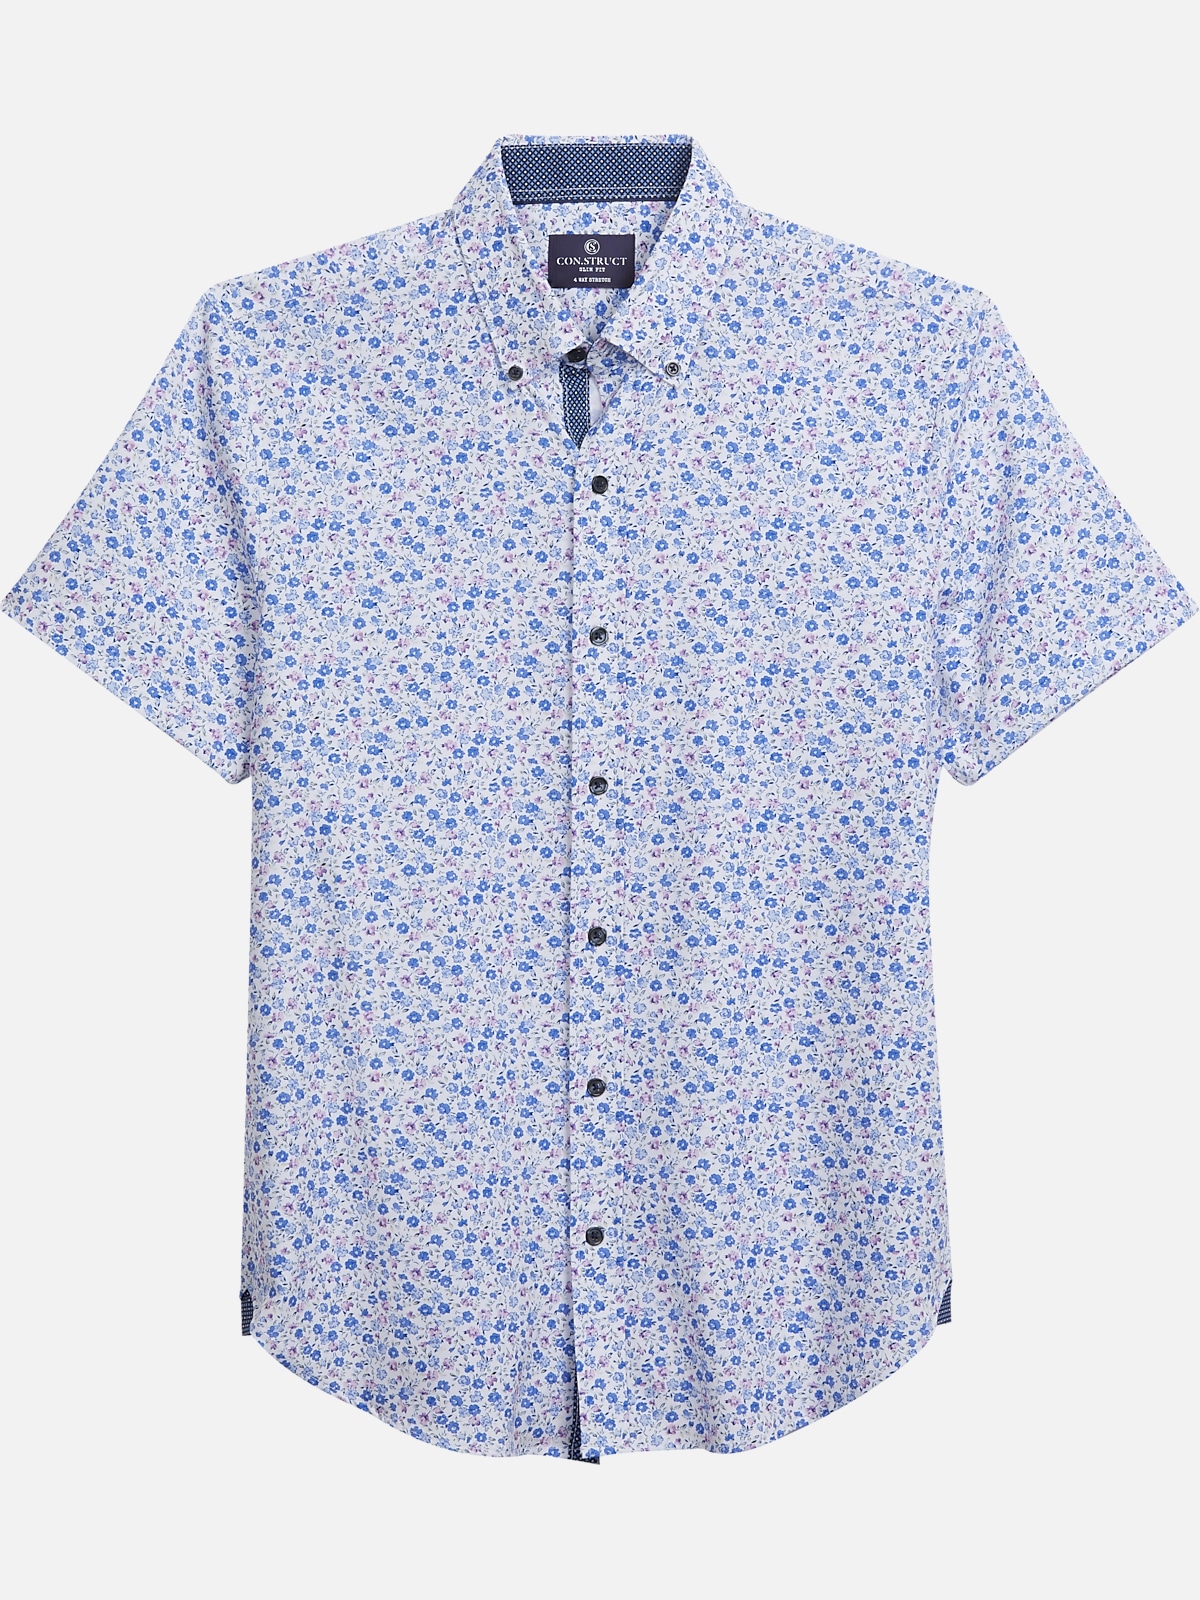 Con.Struct Slim Fit Mini Floral Sport Shirt | All Sale| Men's Wearhouse